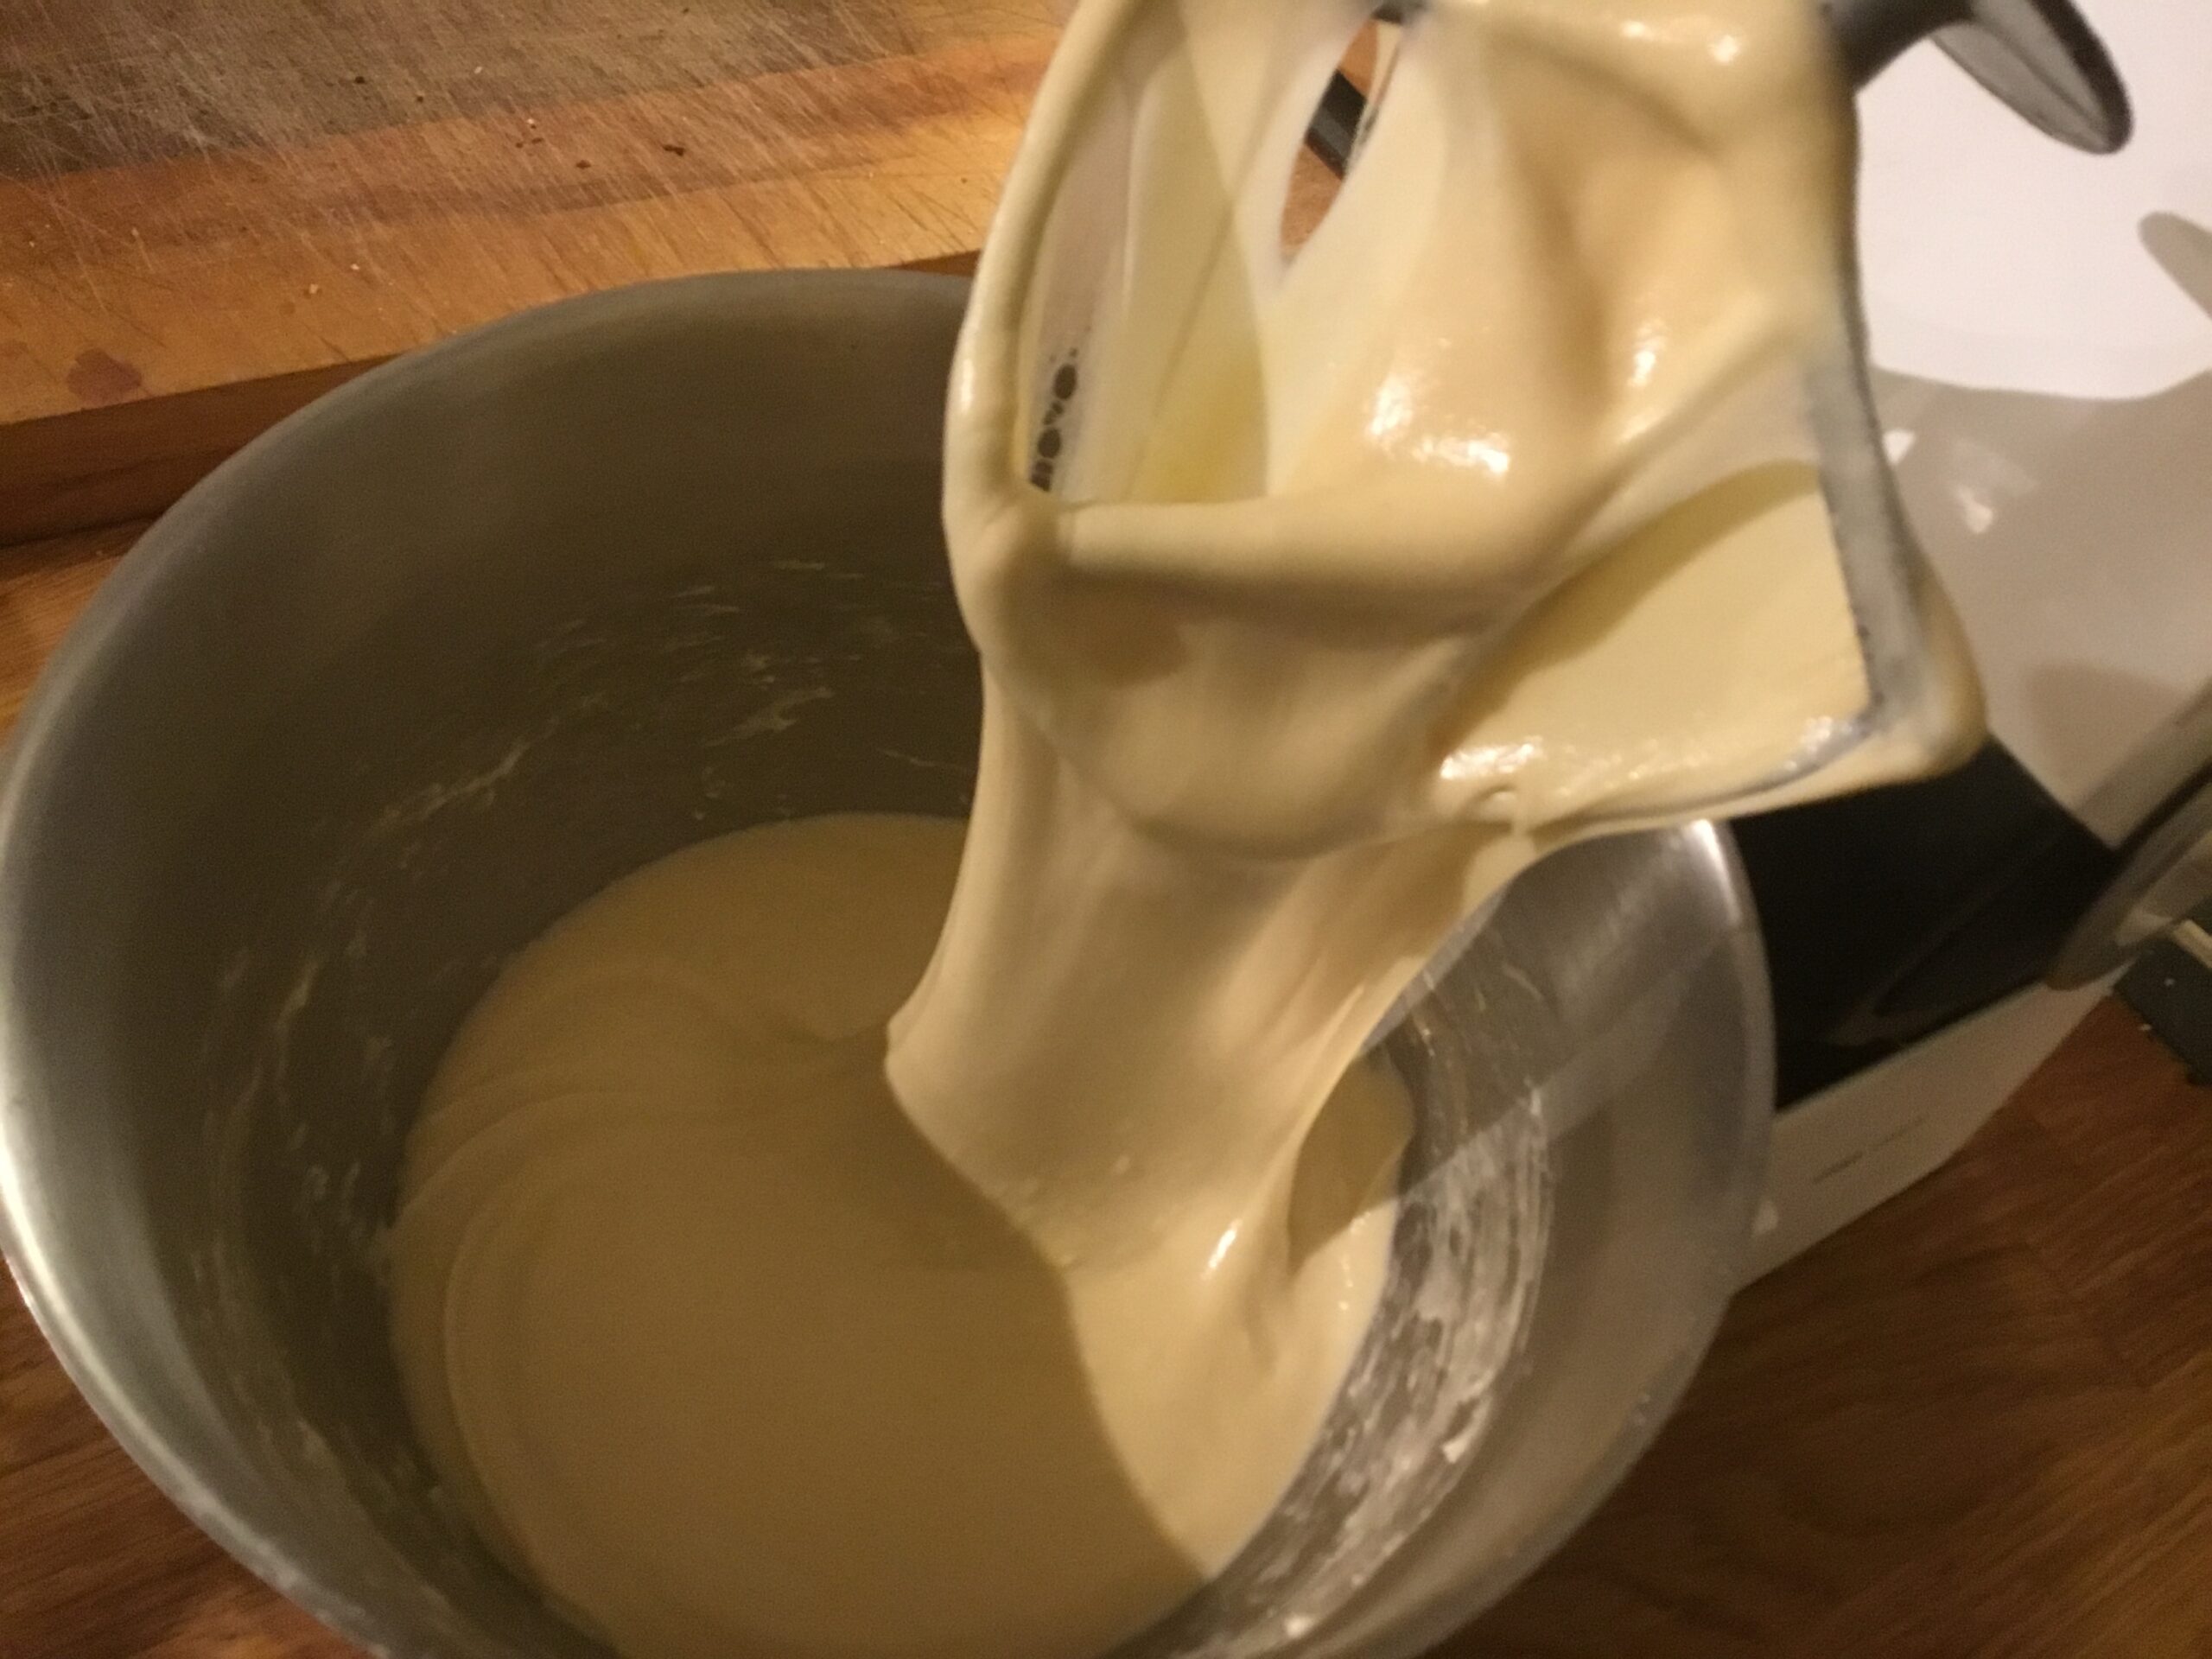 Ribbony and very elastic dough